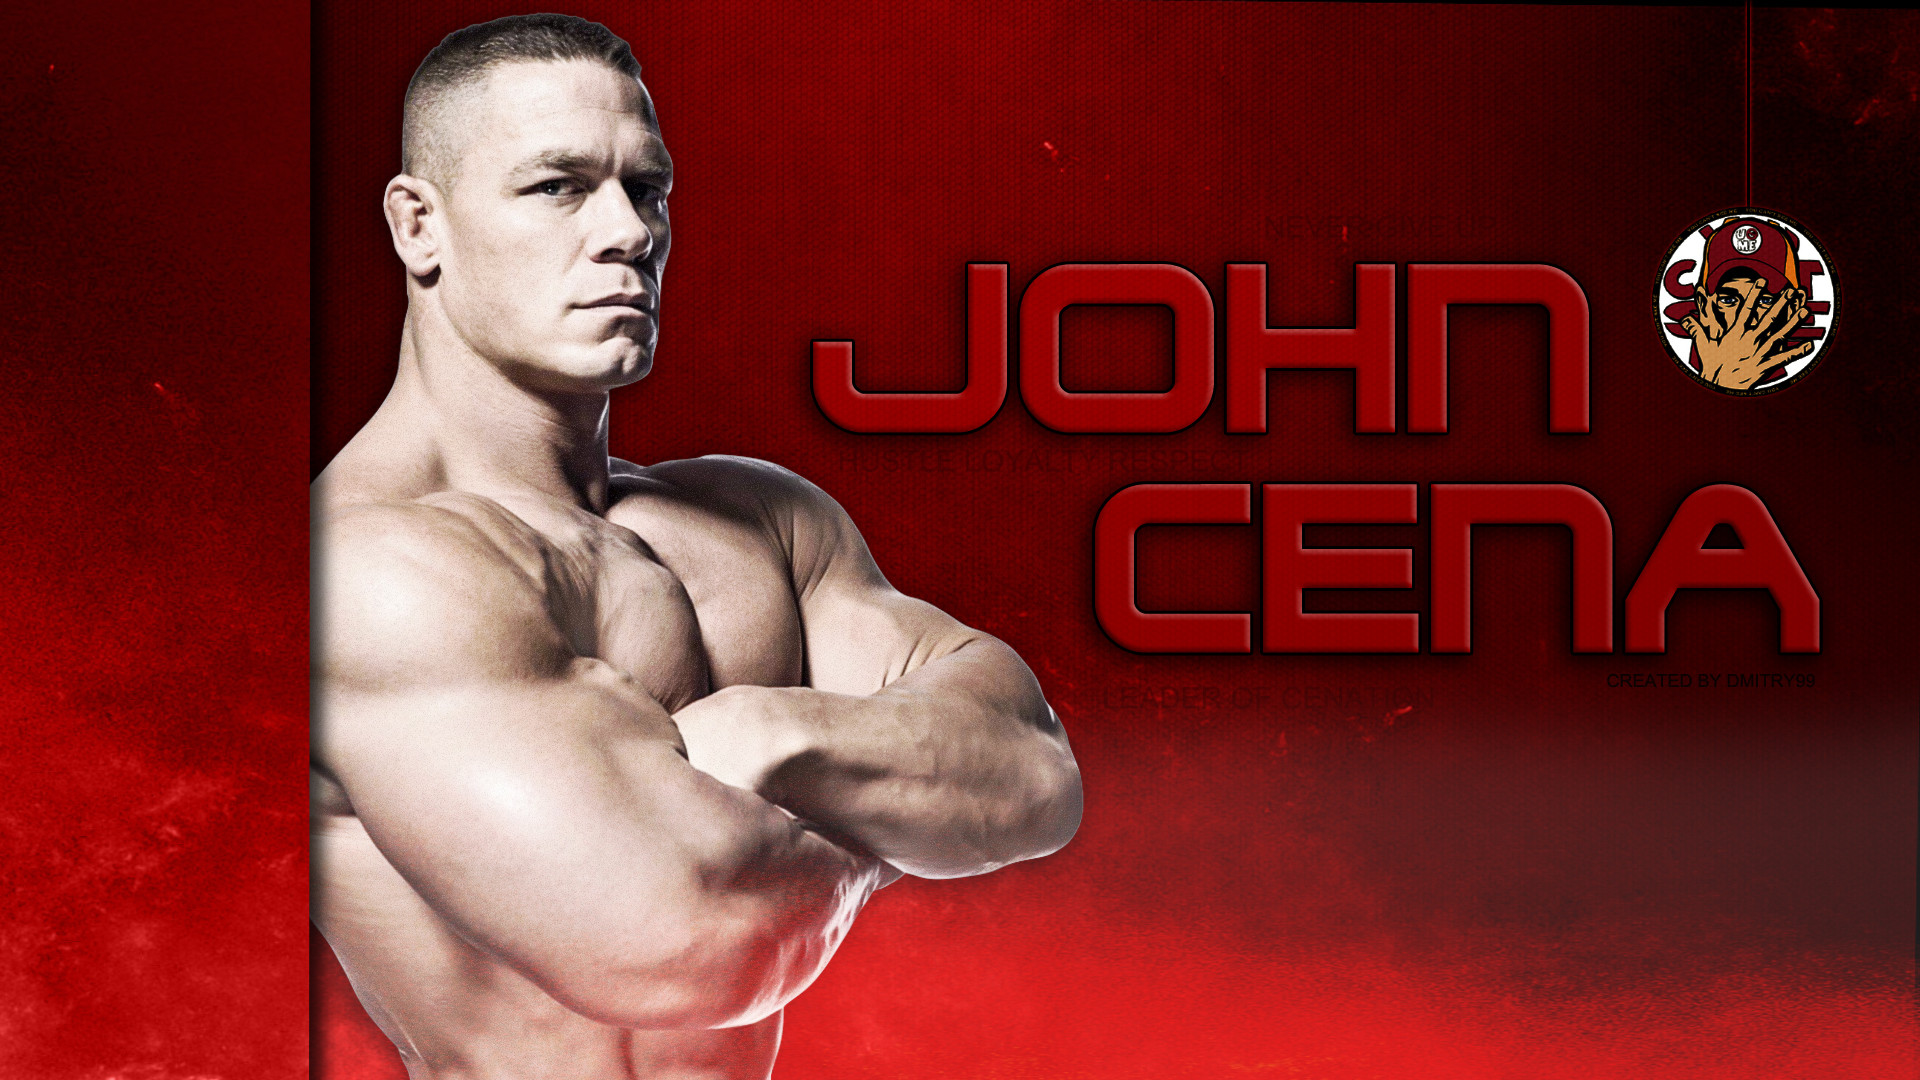 John Cena Wallpaper Free Download10 - Wwe John Cena Wallpaper 2015 , HD Wallpaper & Backgrounds